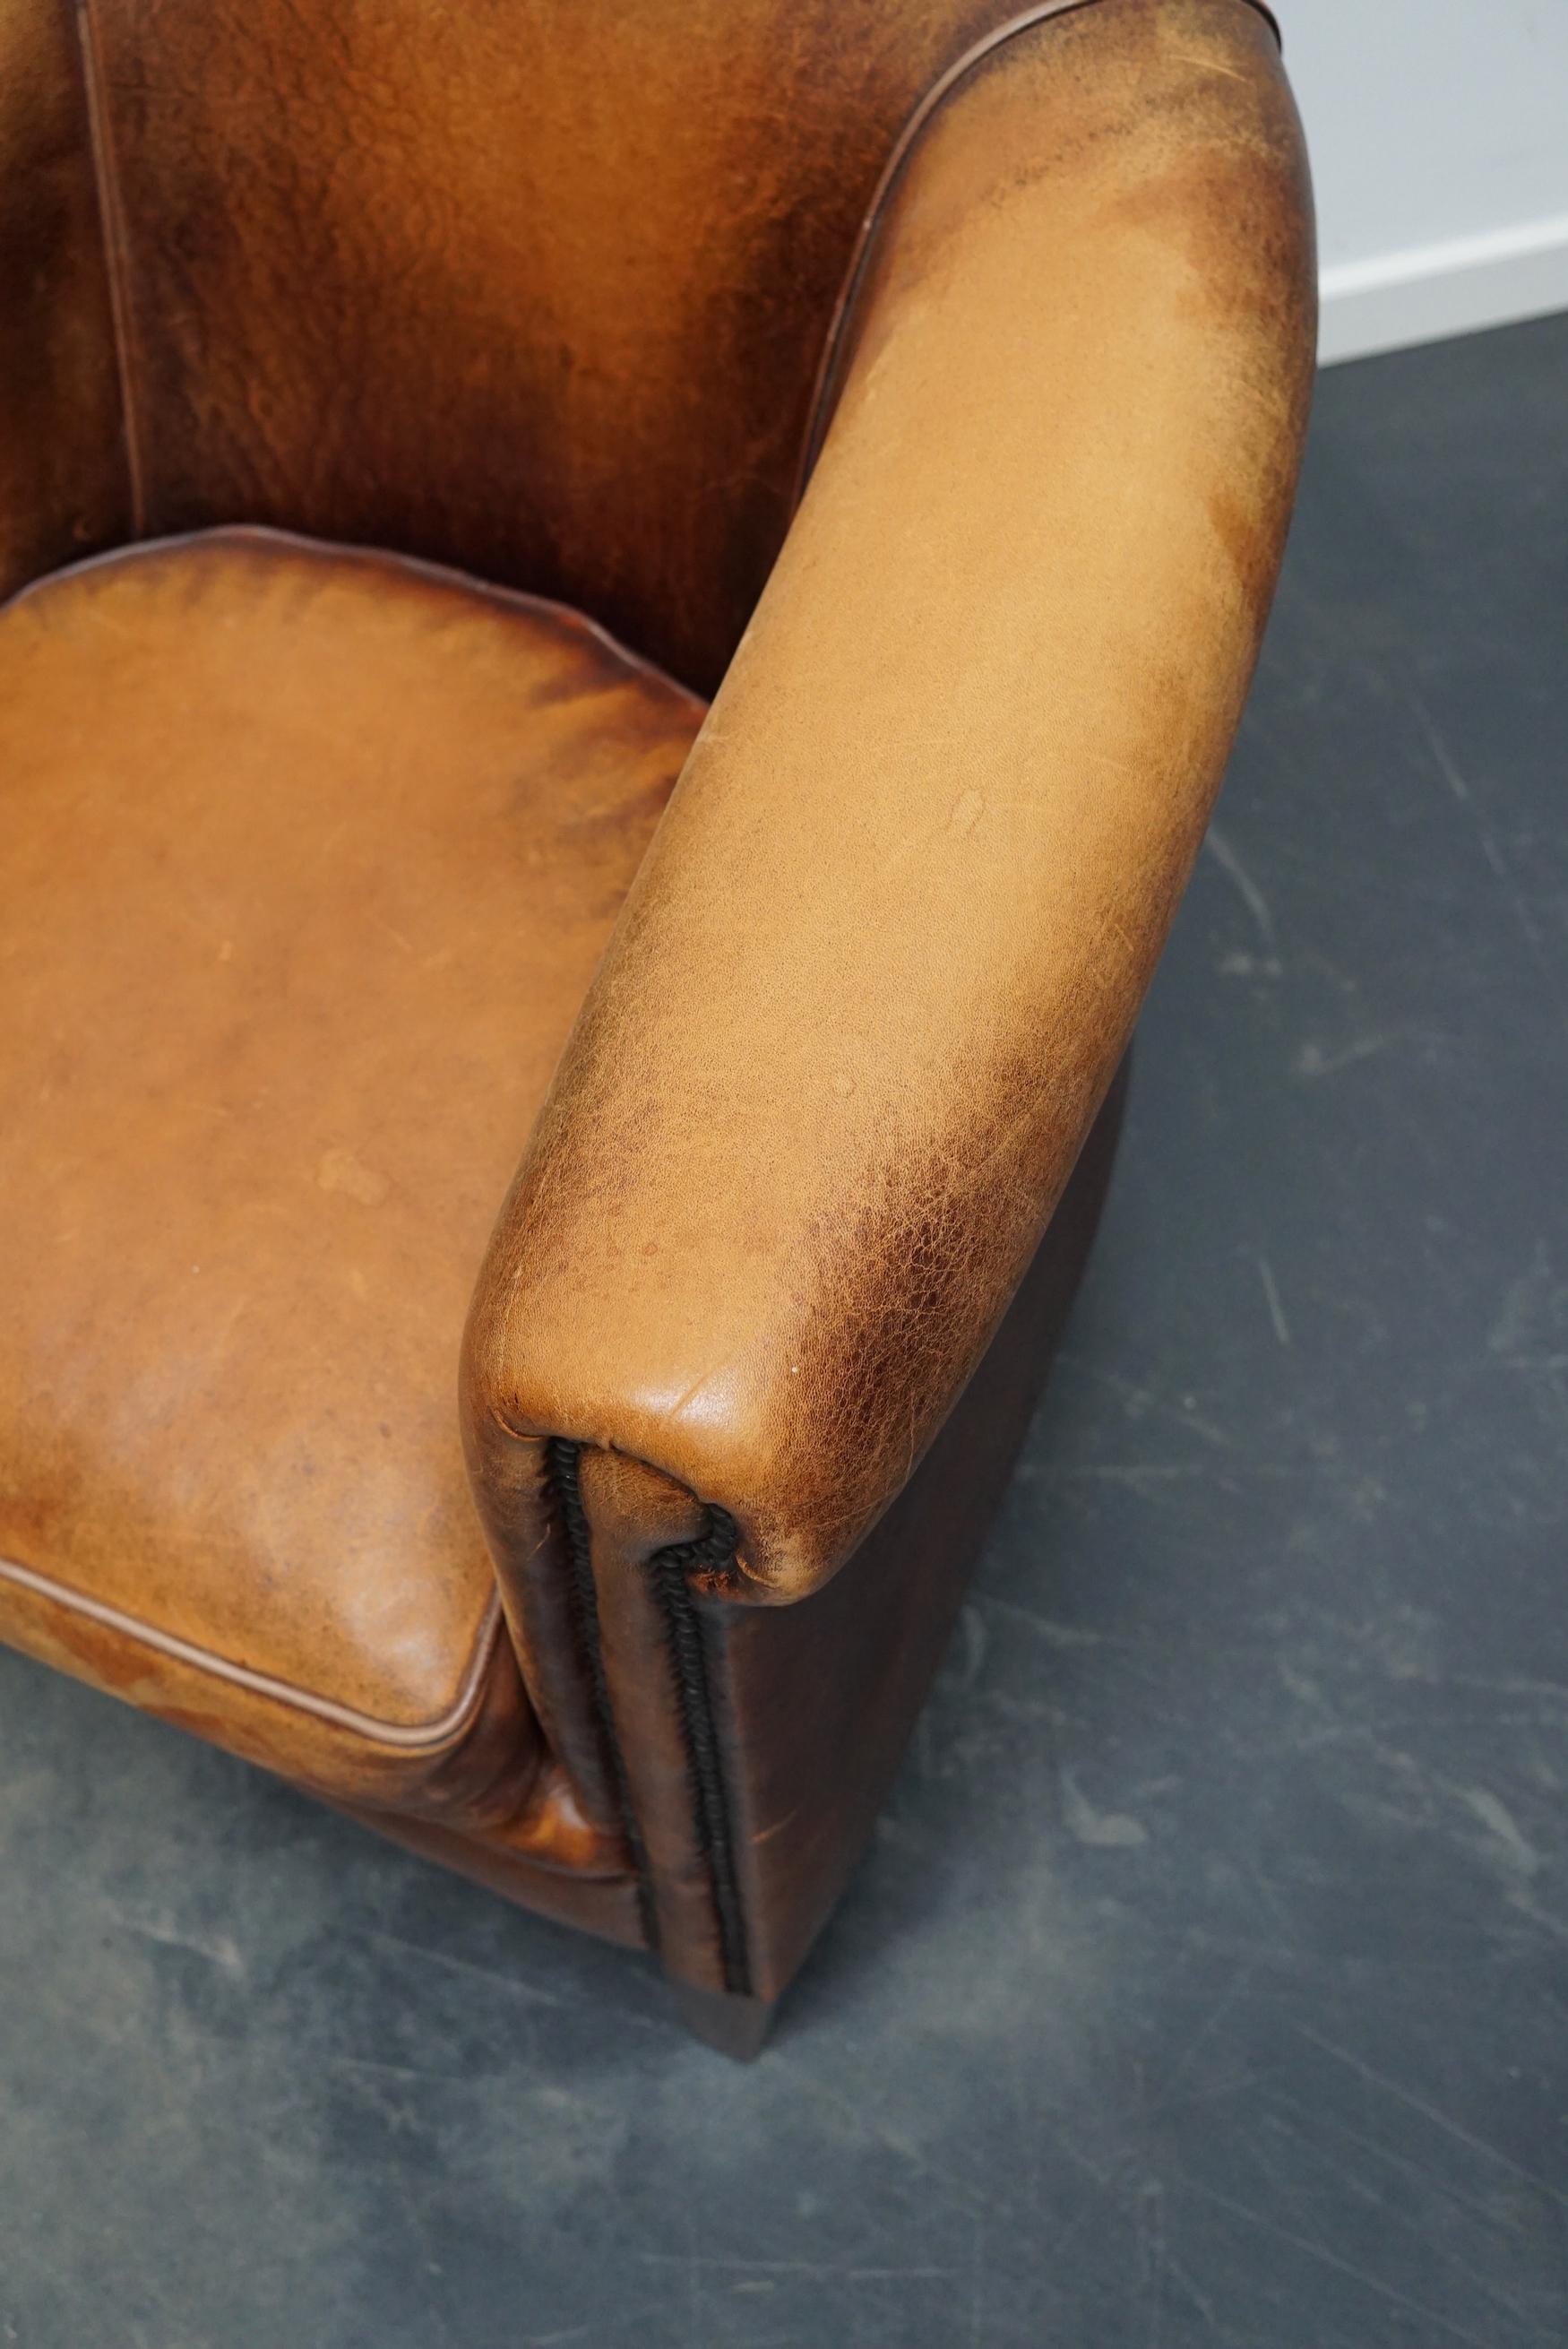 Vintage Dutch Cognac Colored Leather Club Chair, Set of 2 12